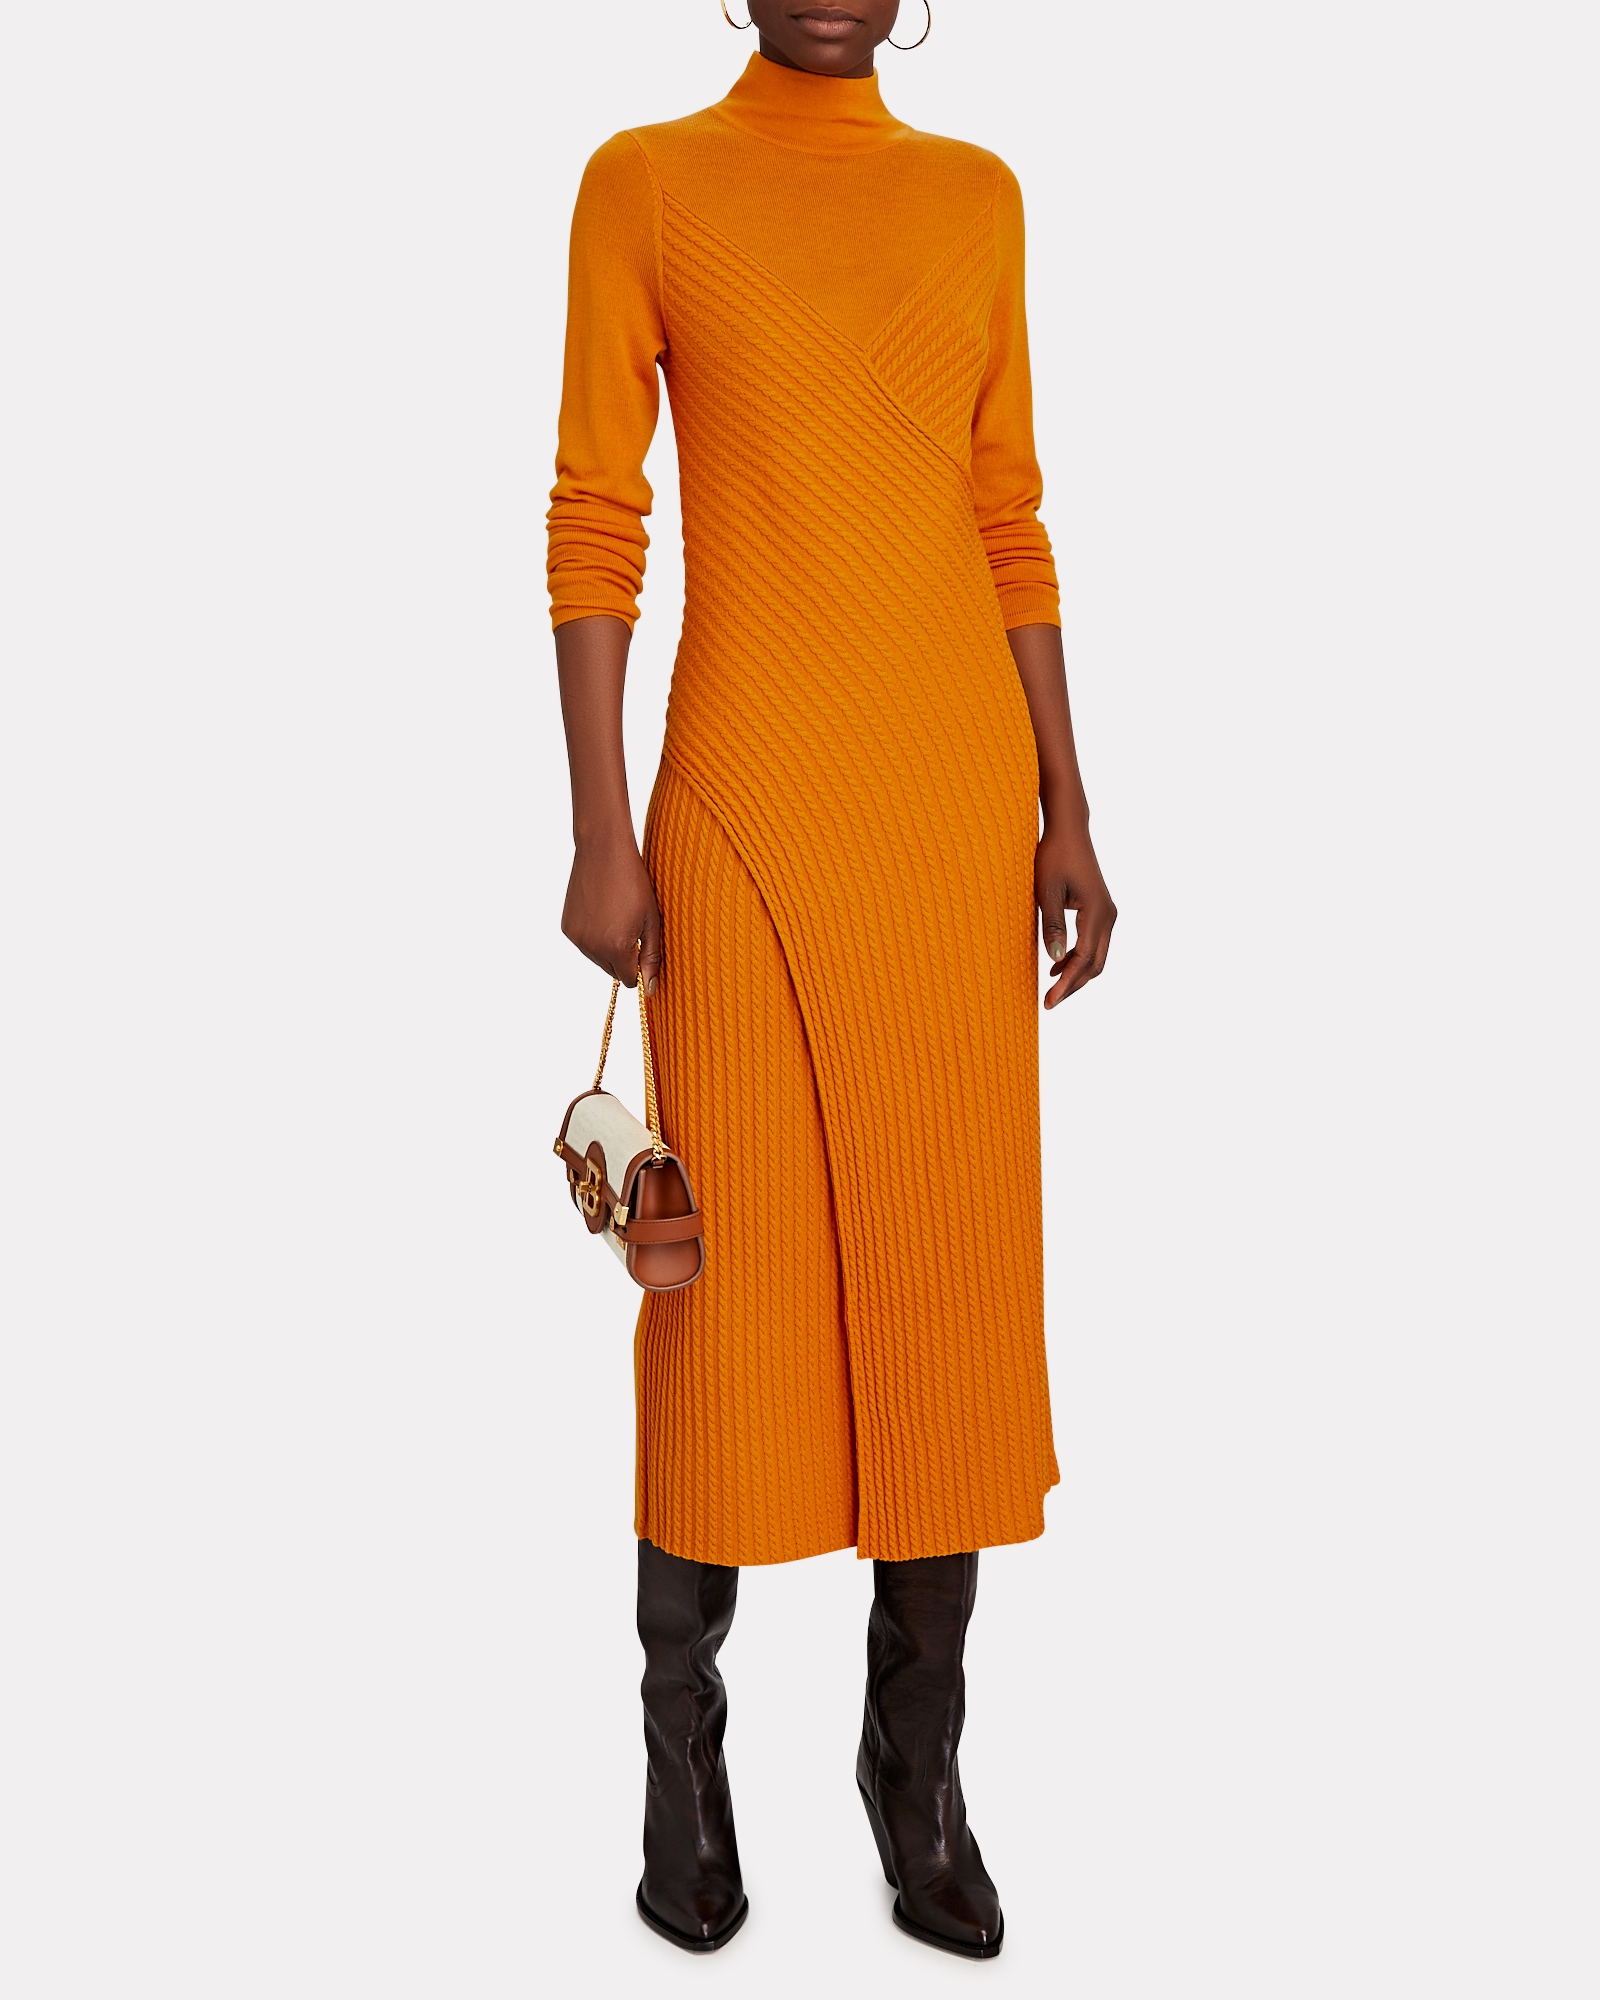 AMUR Leticia Cable Knit Midi Dress | INTERMIX®